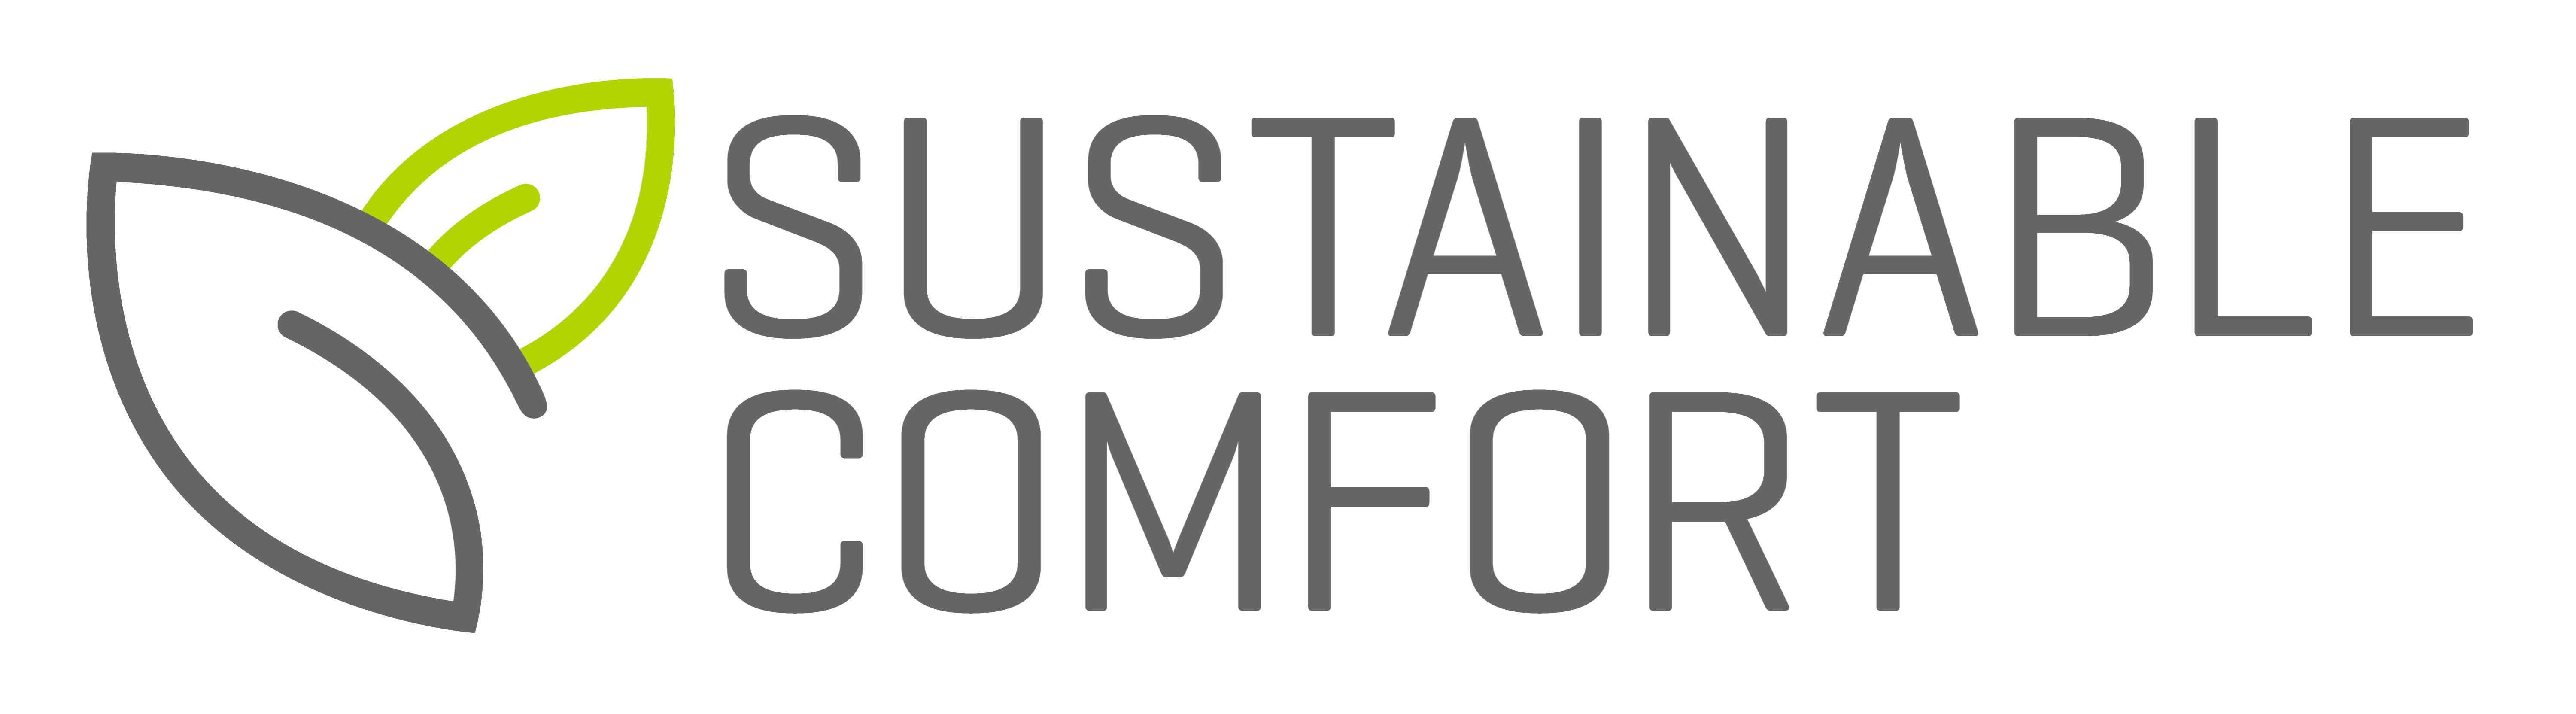 Sustainable Comfort, Inc. company logo